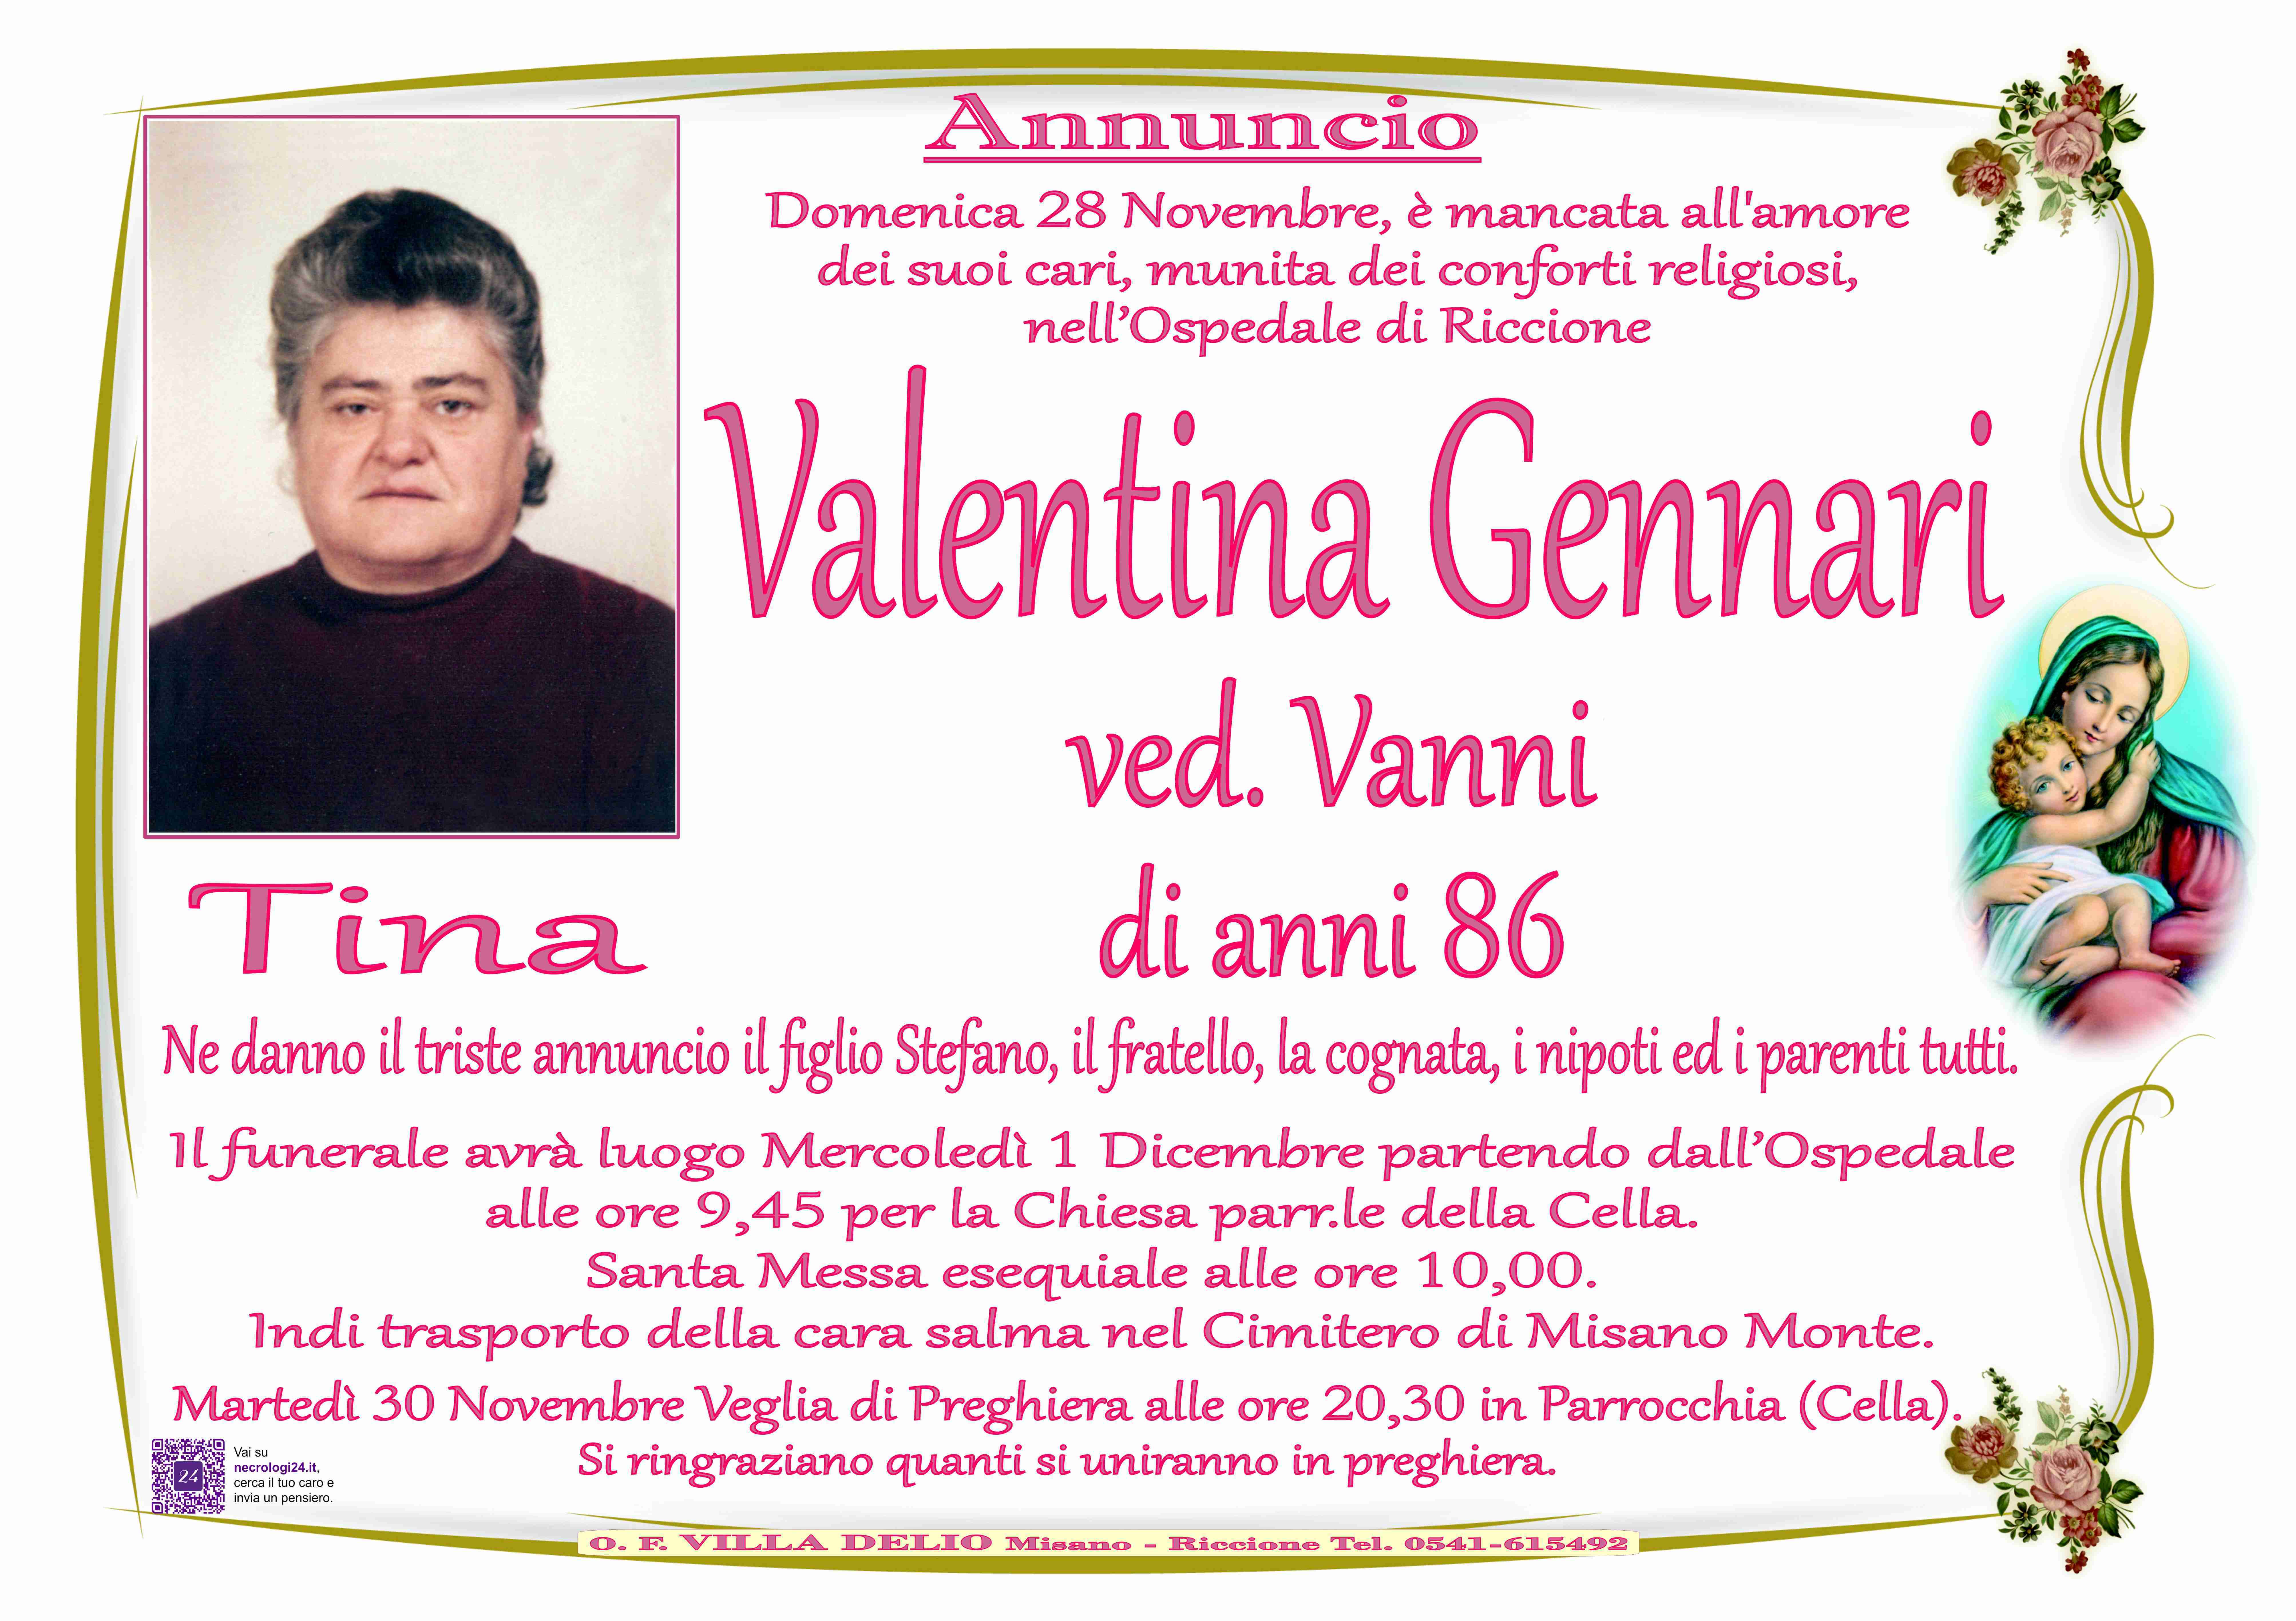 Valentina Gennari